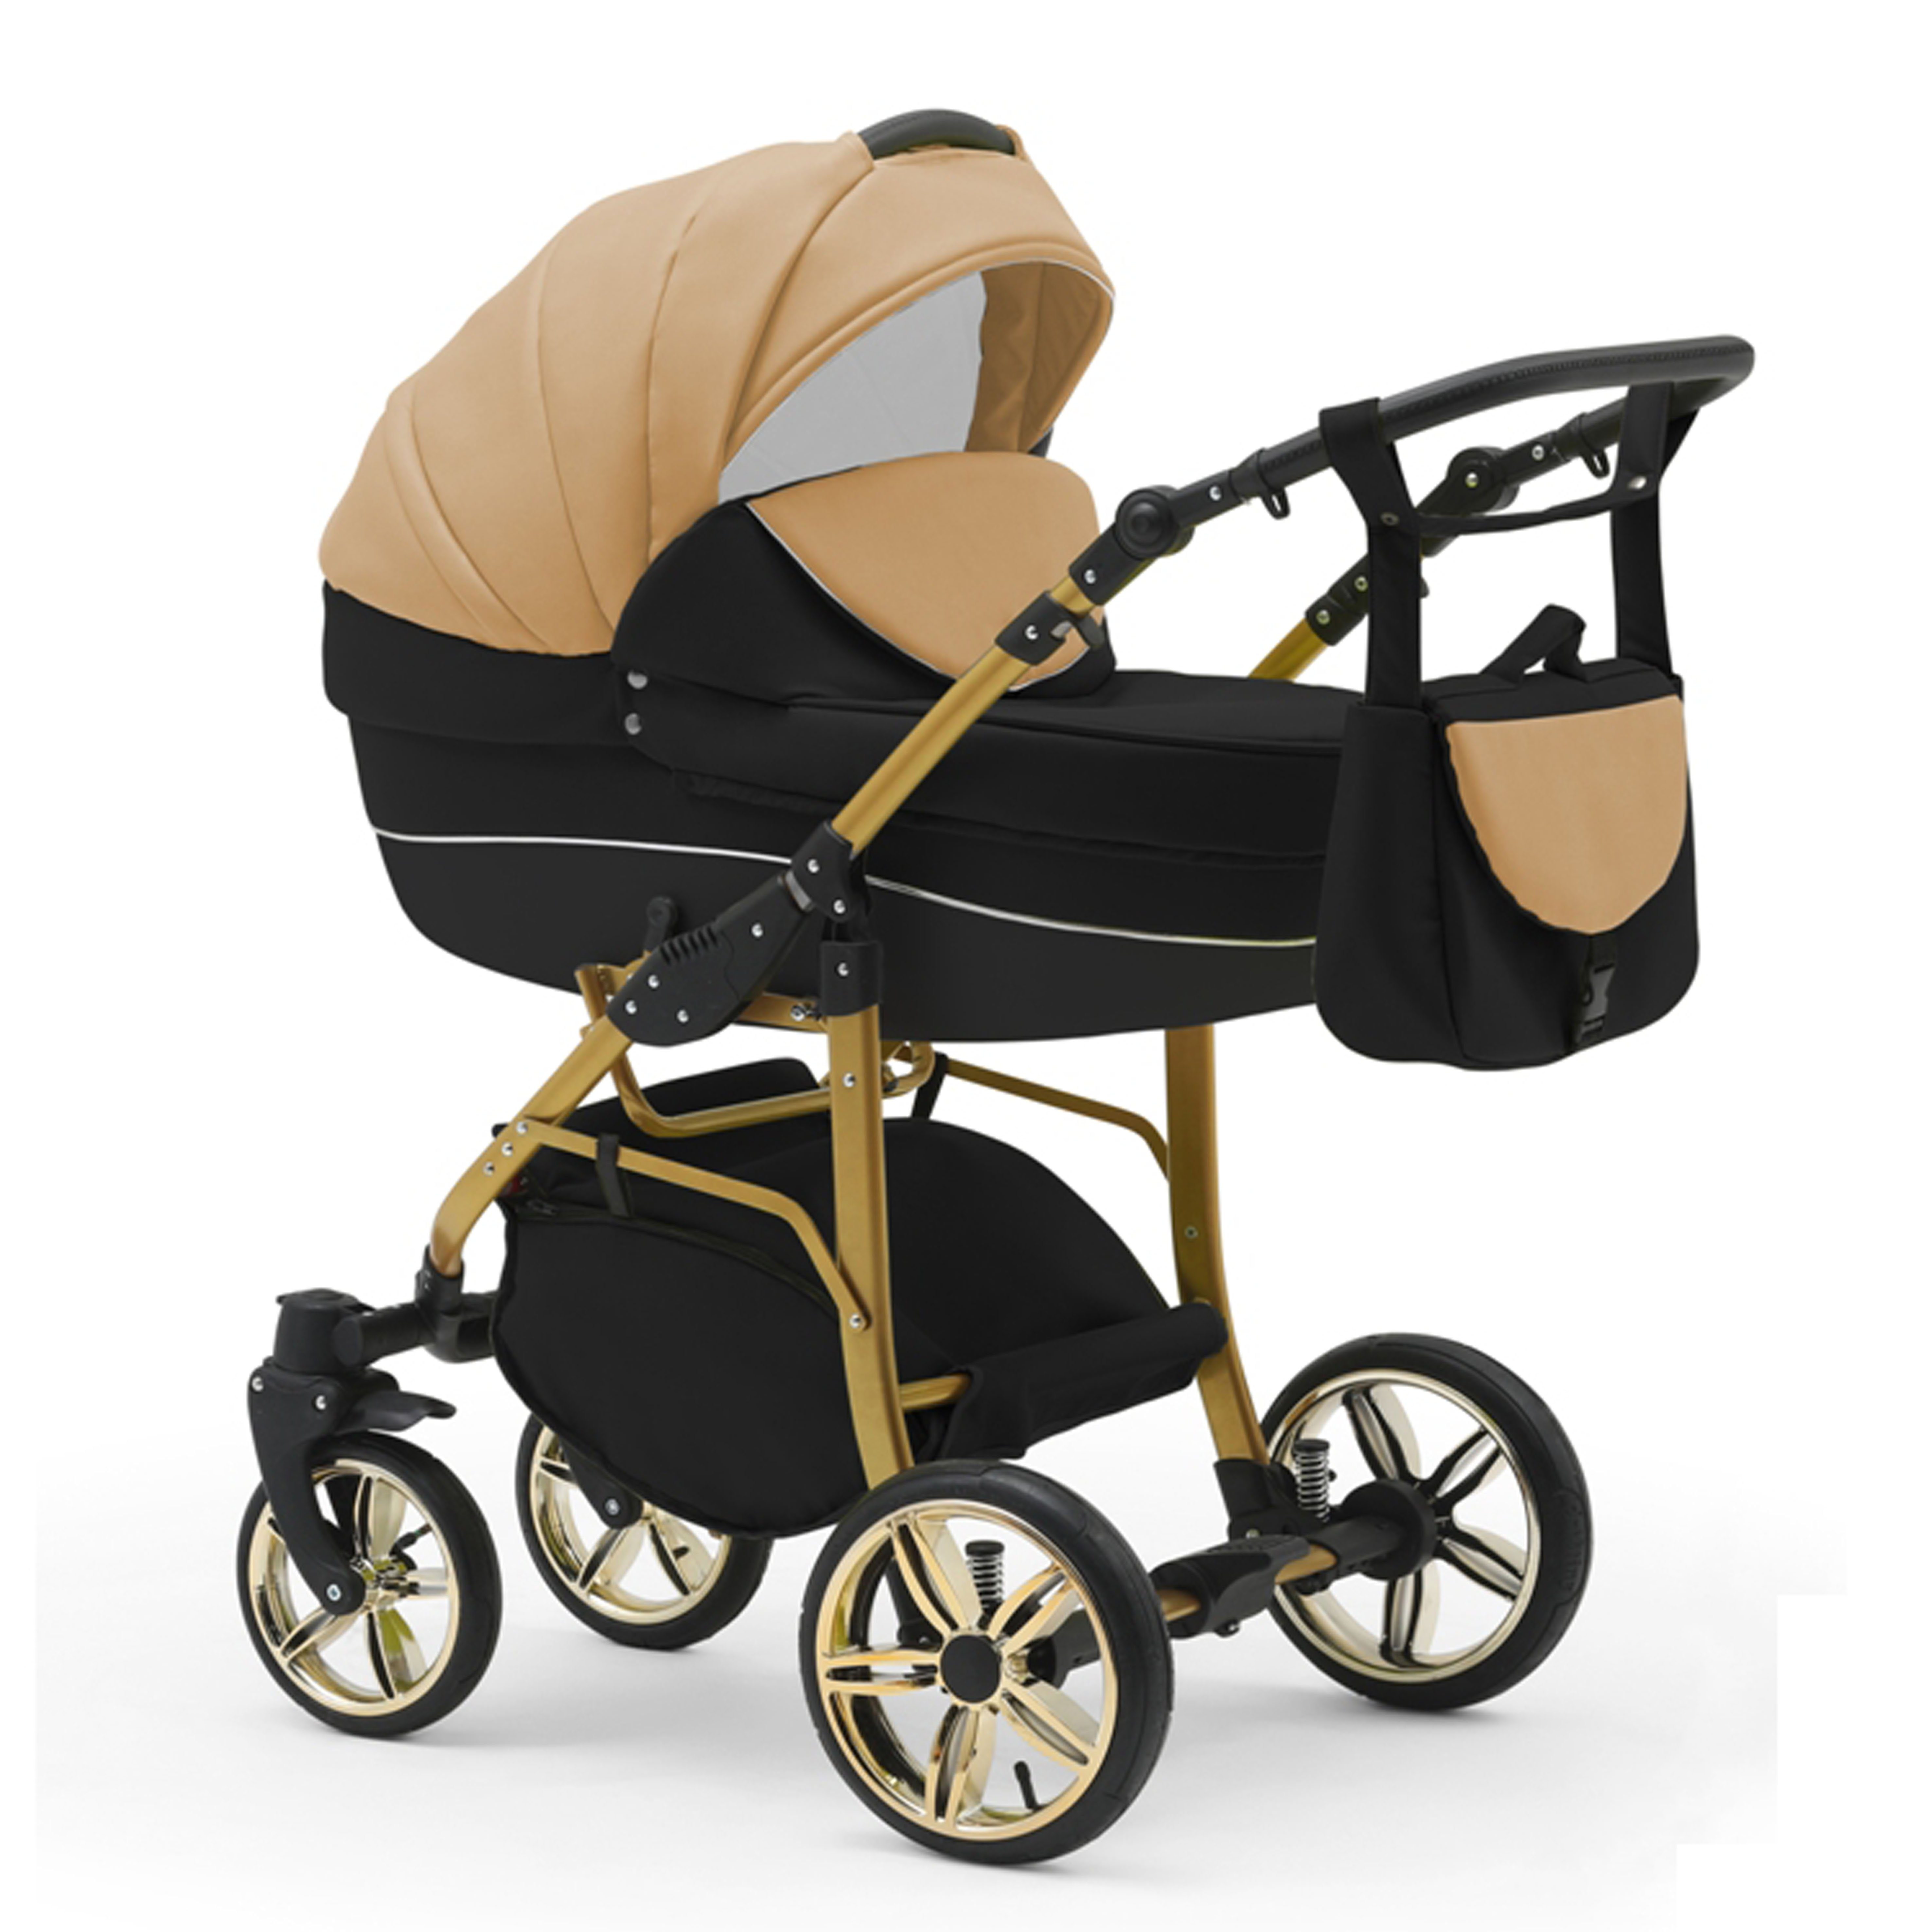 46 babies-on-wheels 1 Kombi-Kinderwagen - Beige-Schwarz 2 - Kinderwagen-Set in Teile Cosmo 13 Farben Gold in